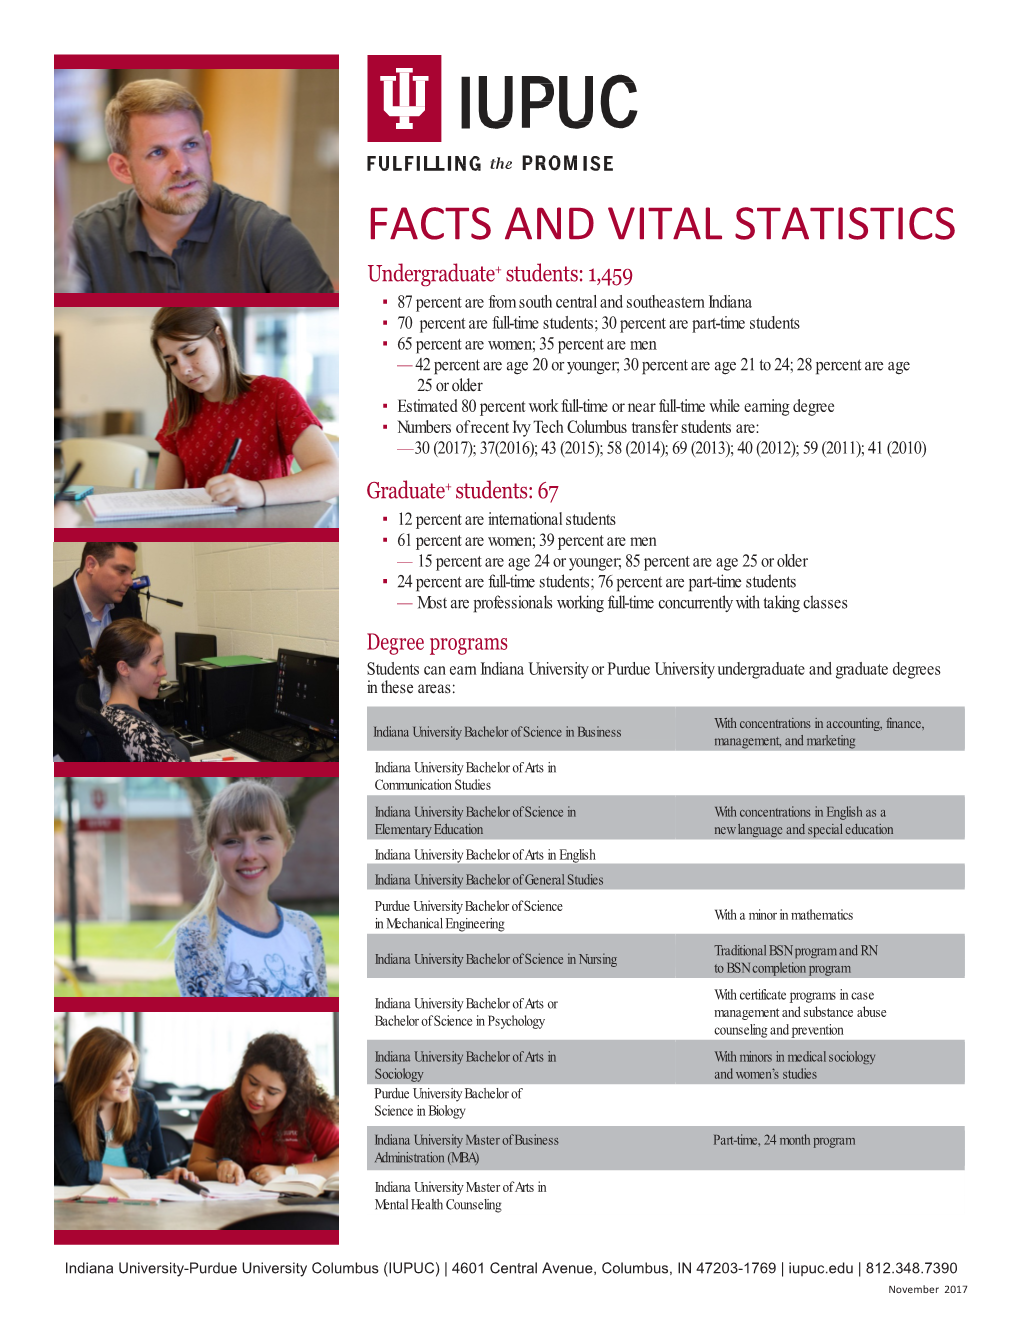 Facts and Vital Statistics